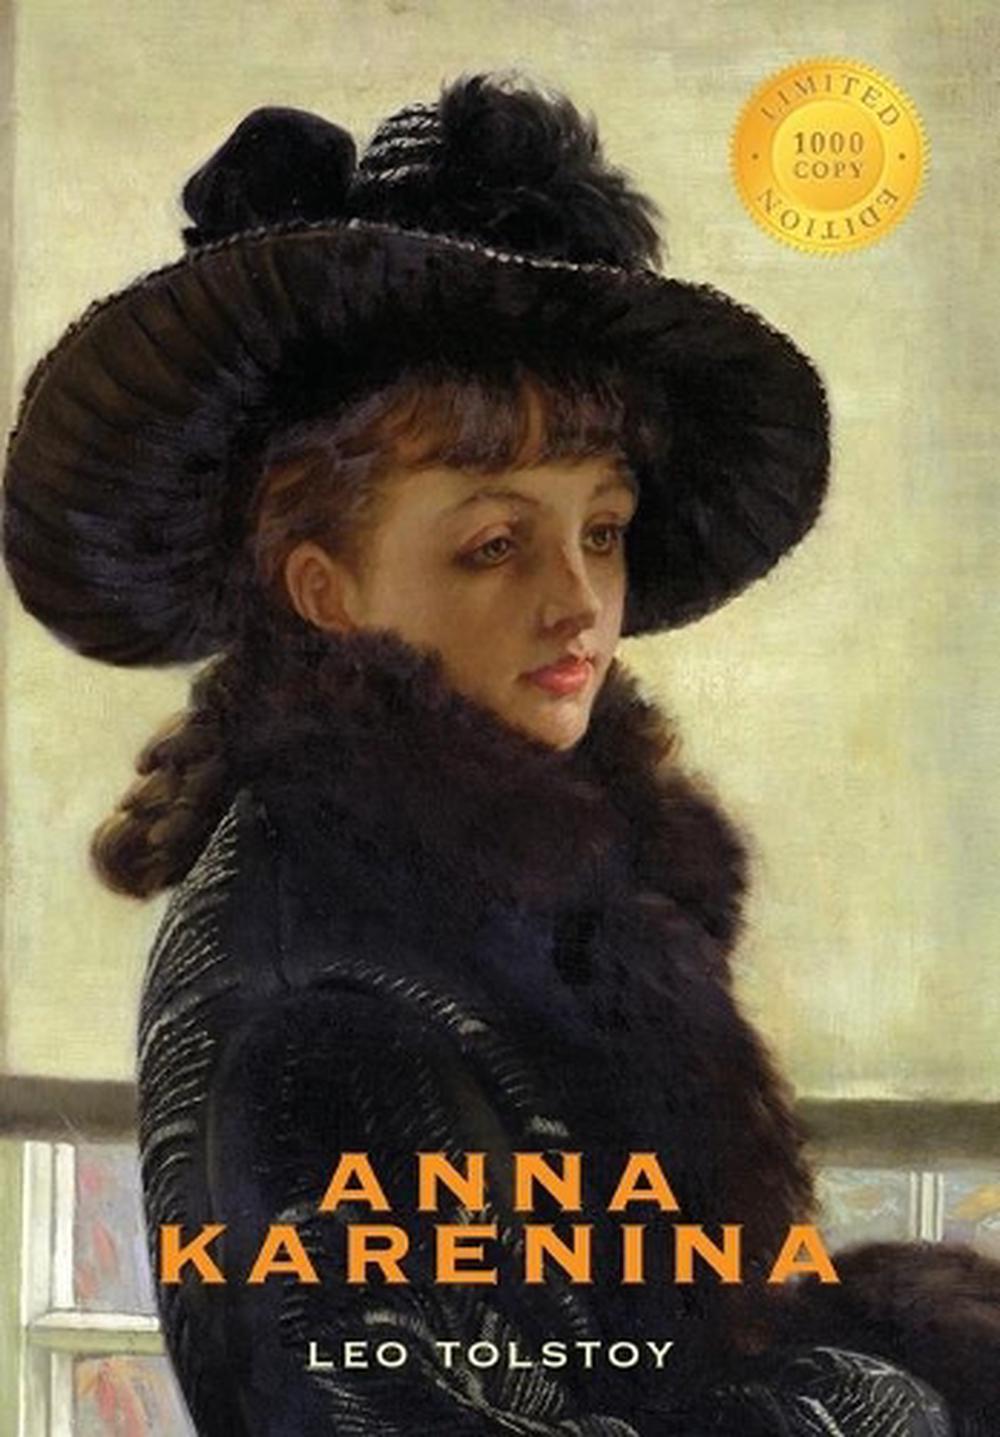 Anna Karenina (1000 Copy Limited Edition) by Leo Tolstoy (English